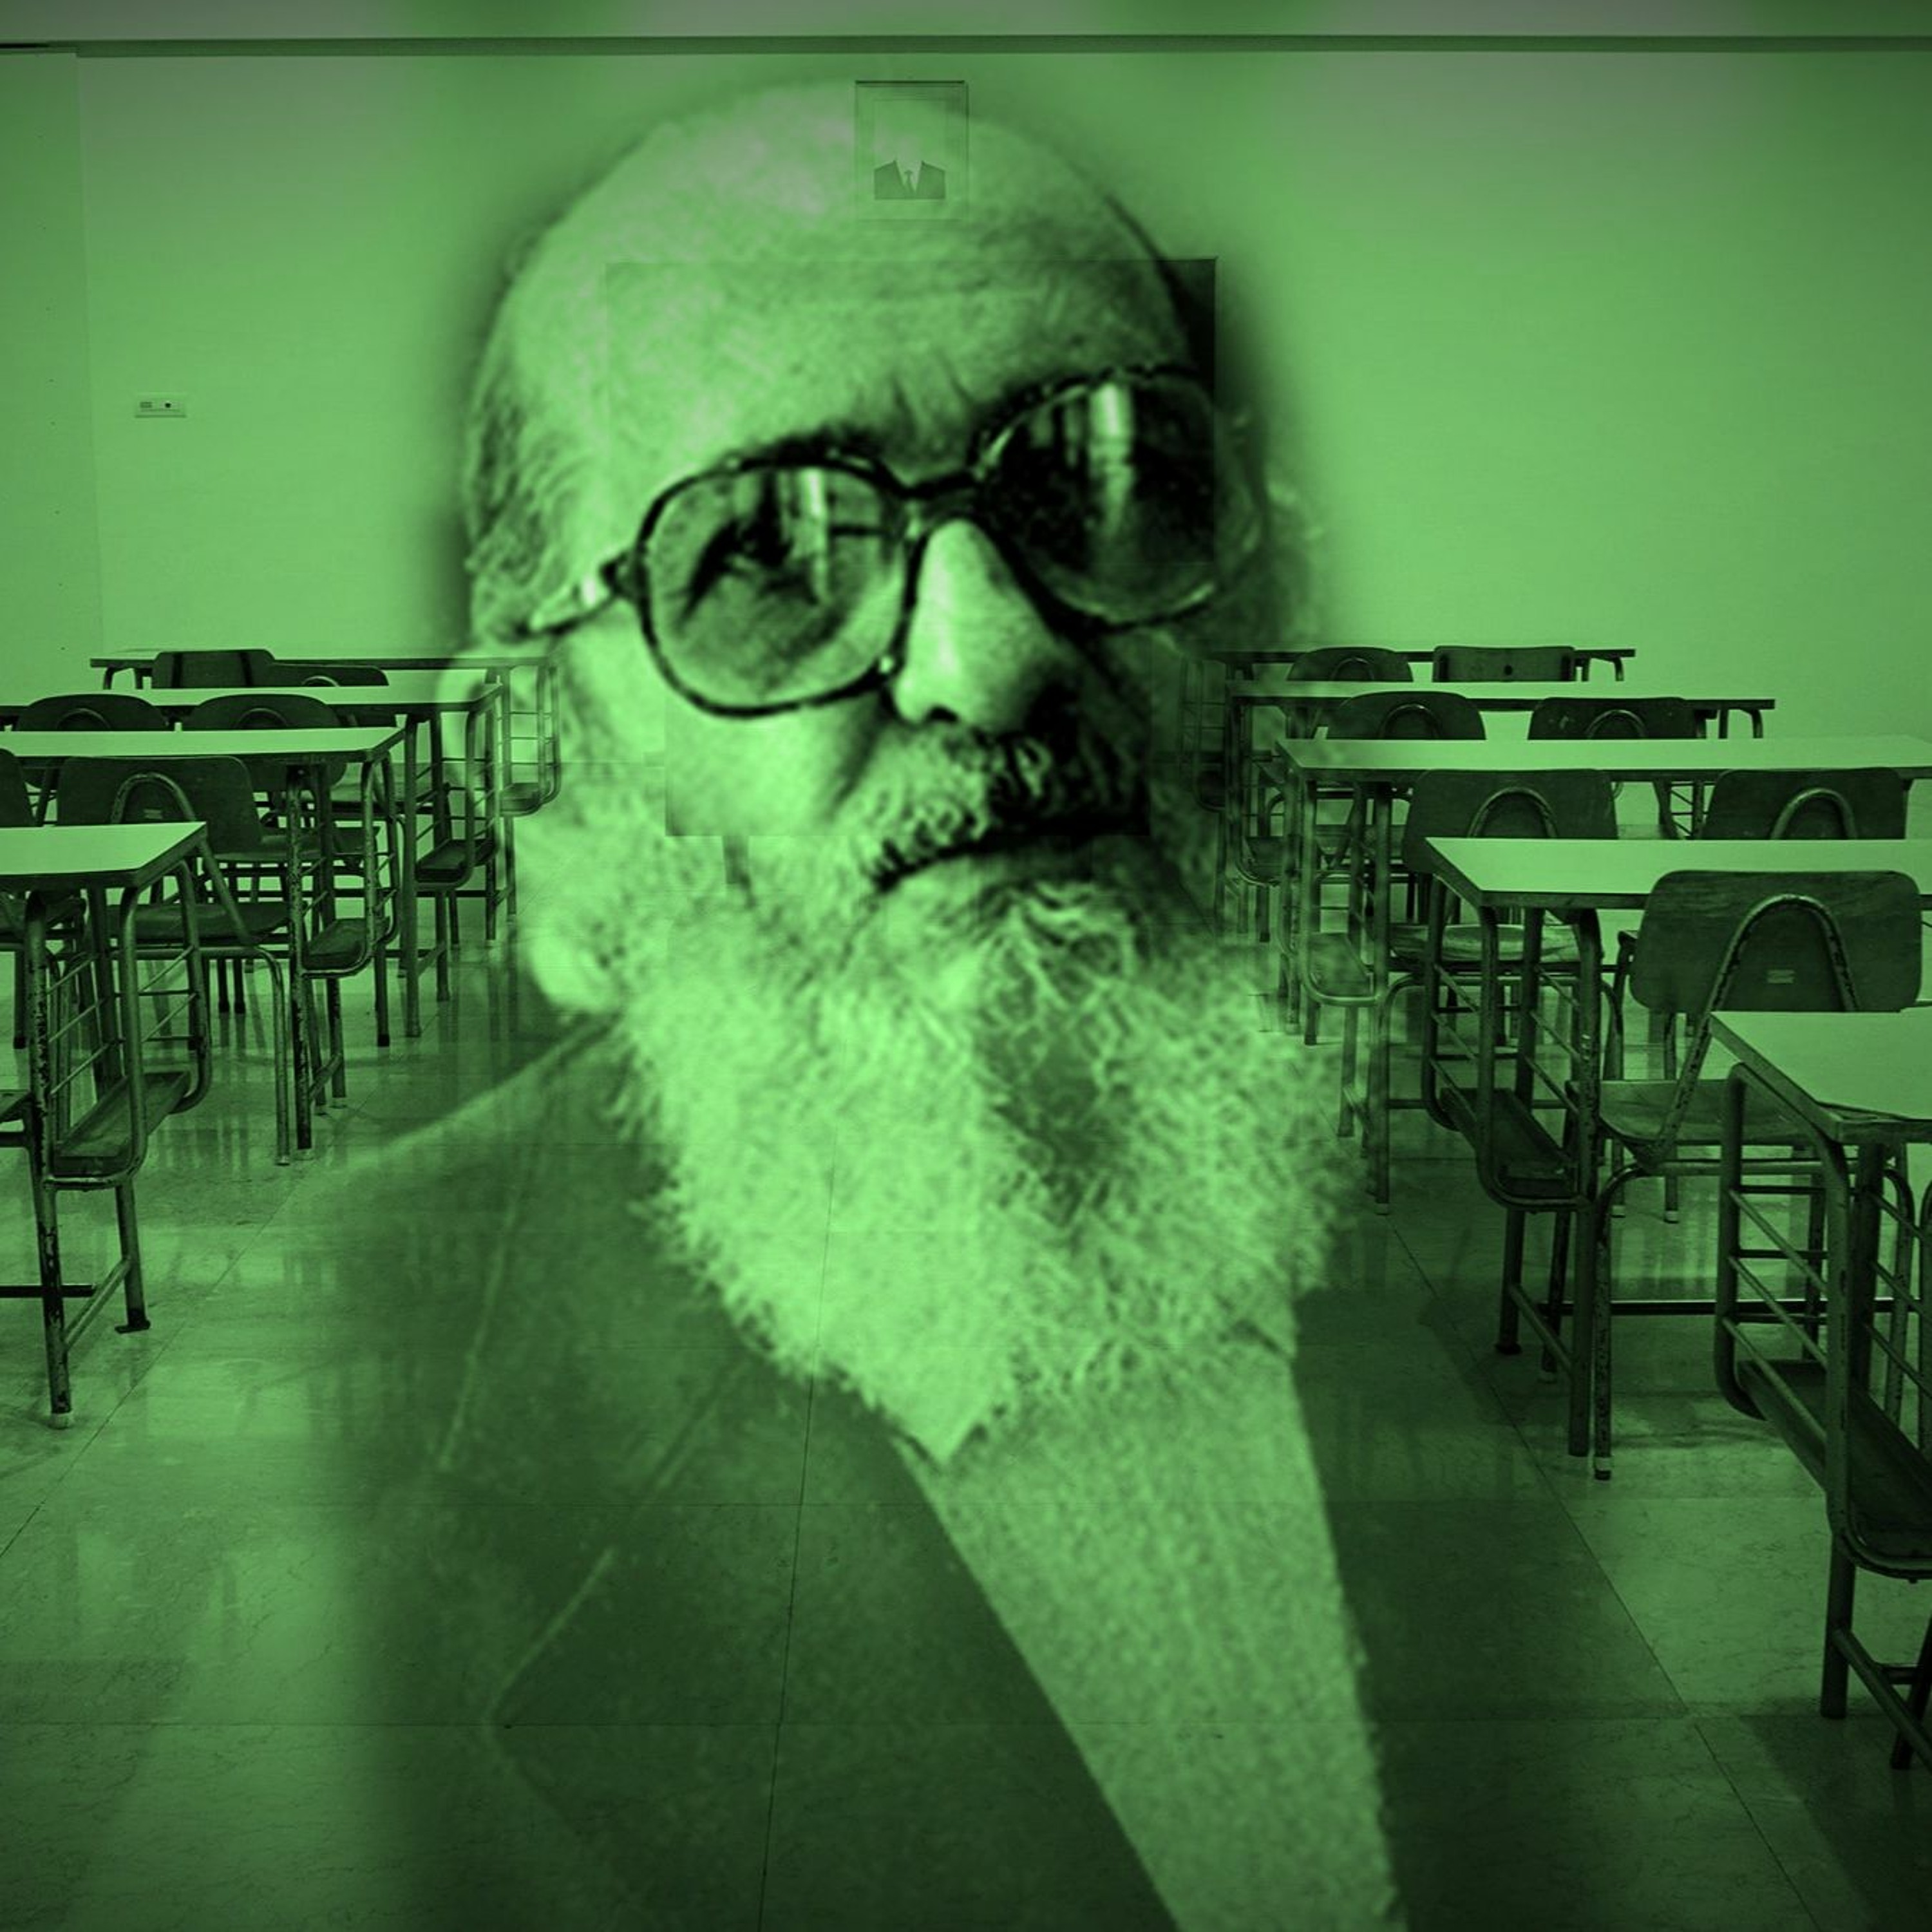 Paulo Freire's Politics of Education